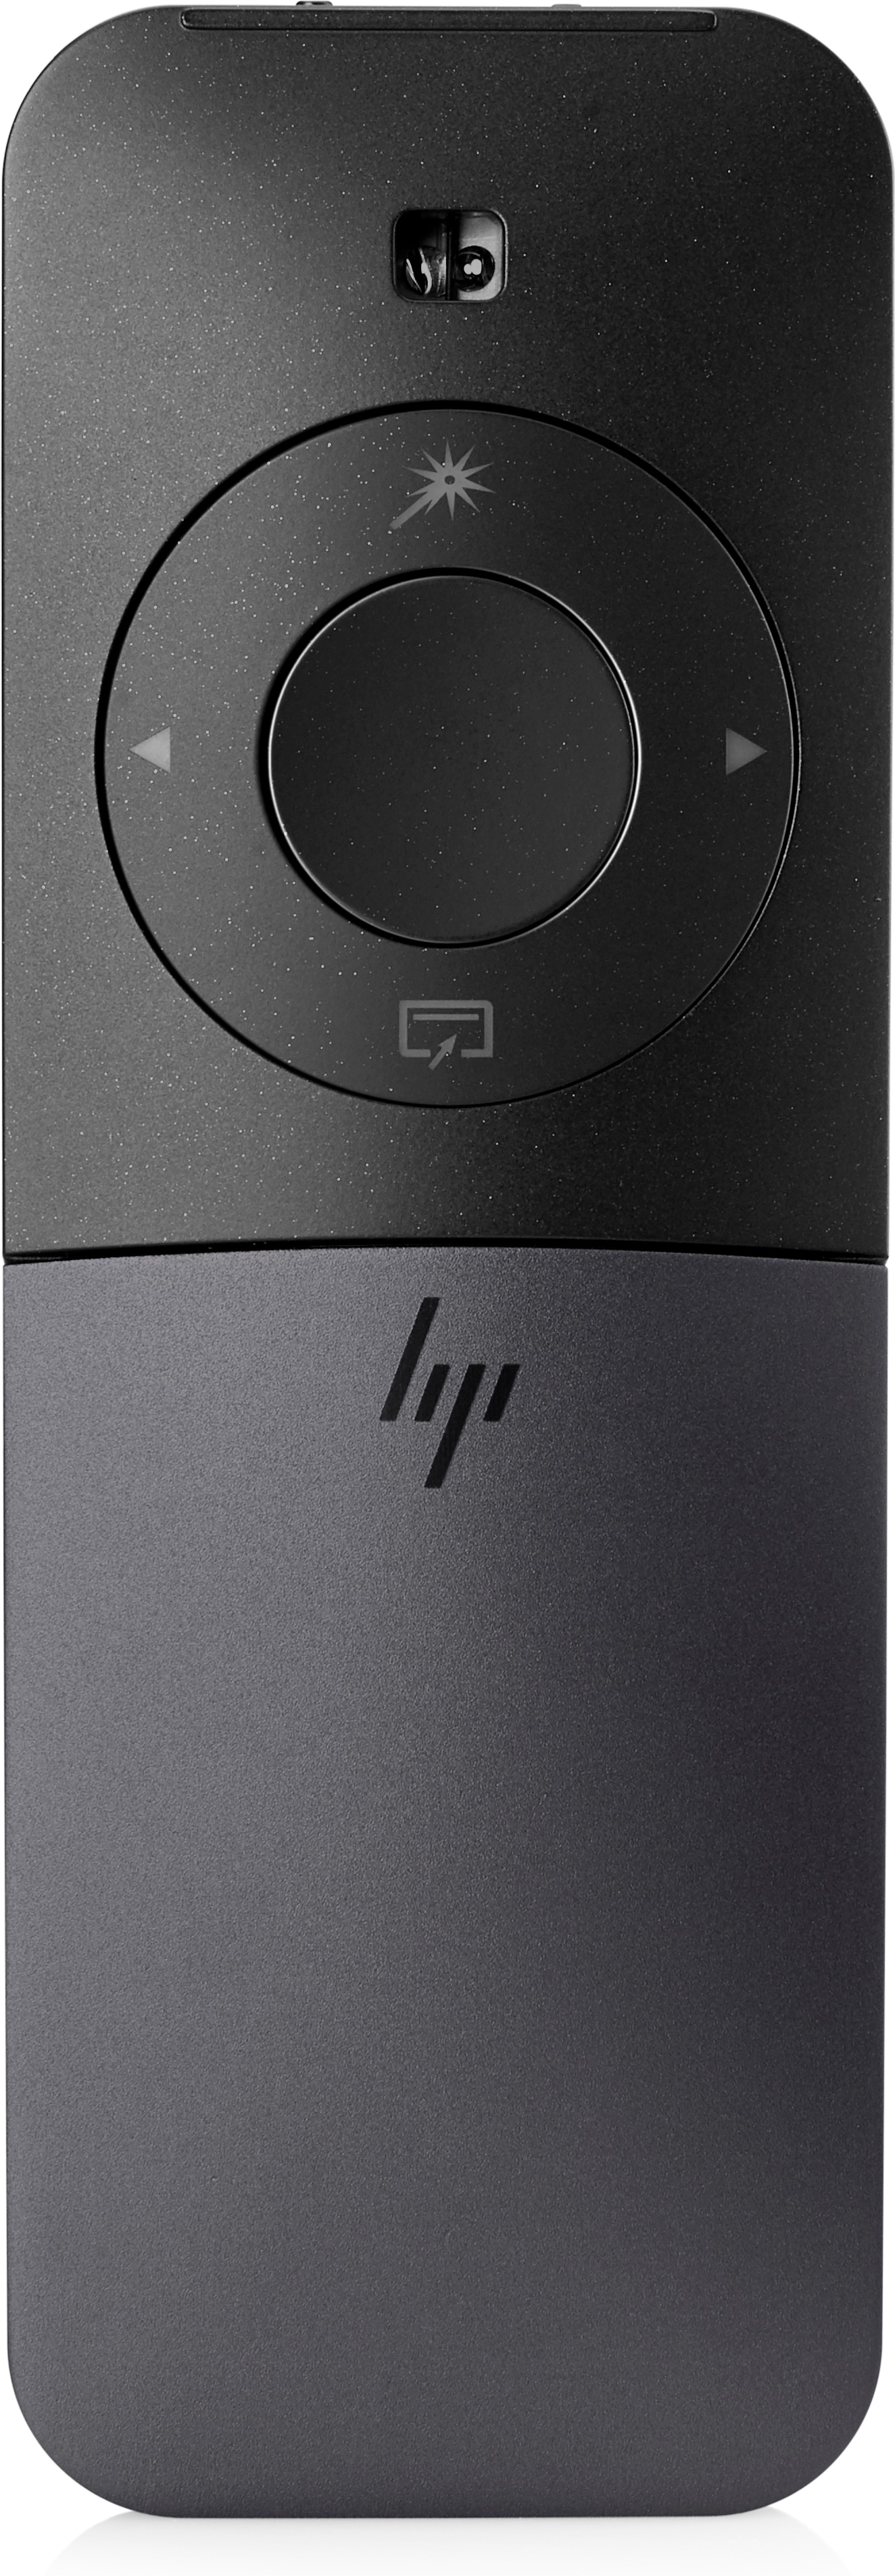 HP Elite trådlösa presentatörer Bluetooth Svart